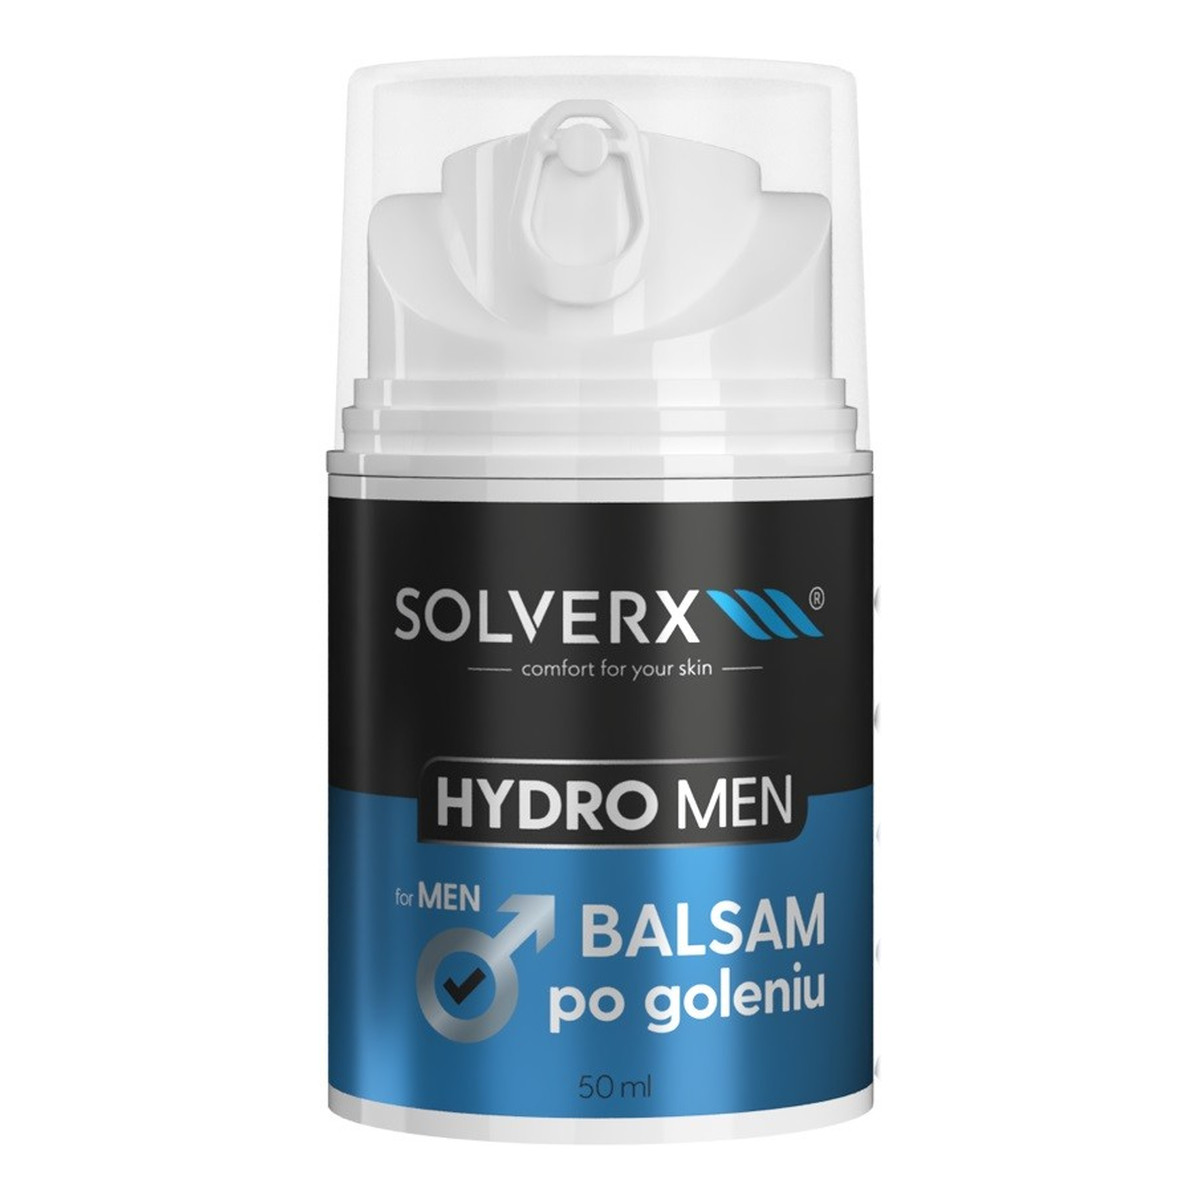 Solverx Hydro Men Balsam po goleniu 50ml